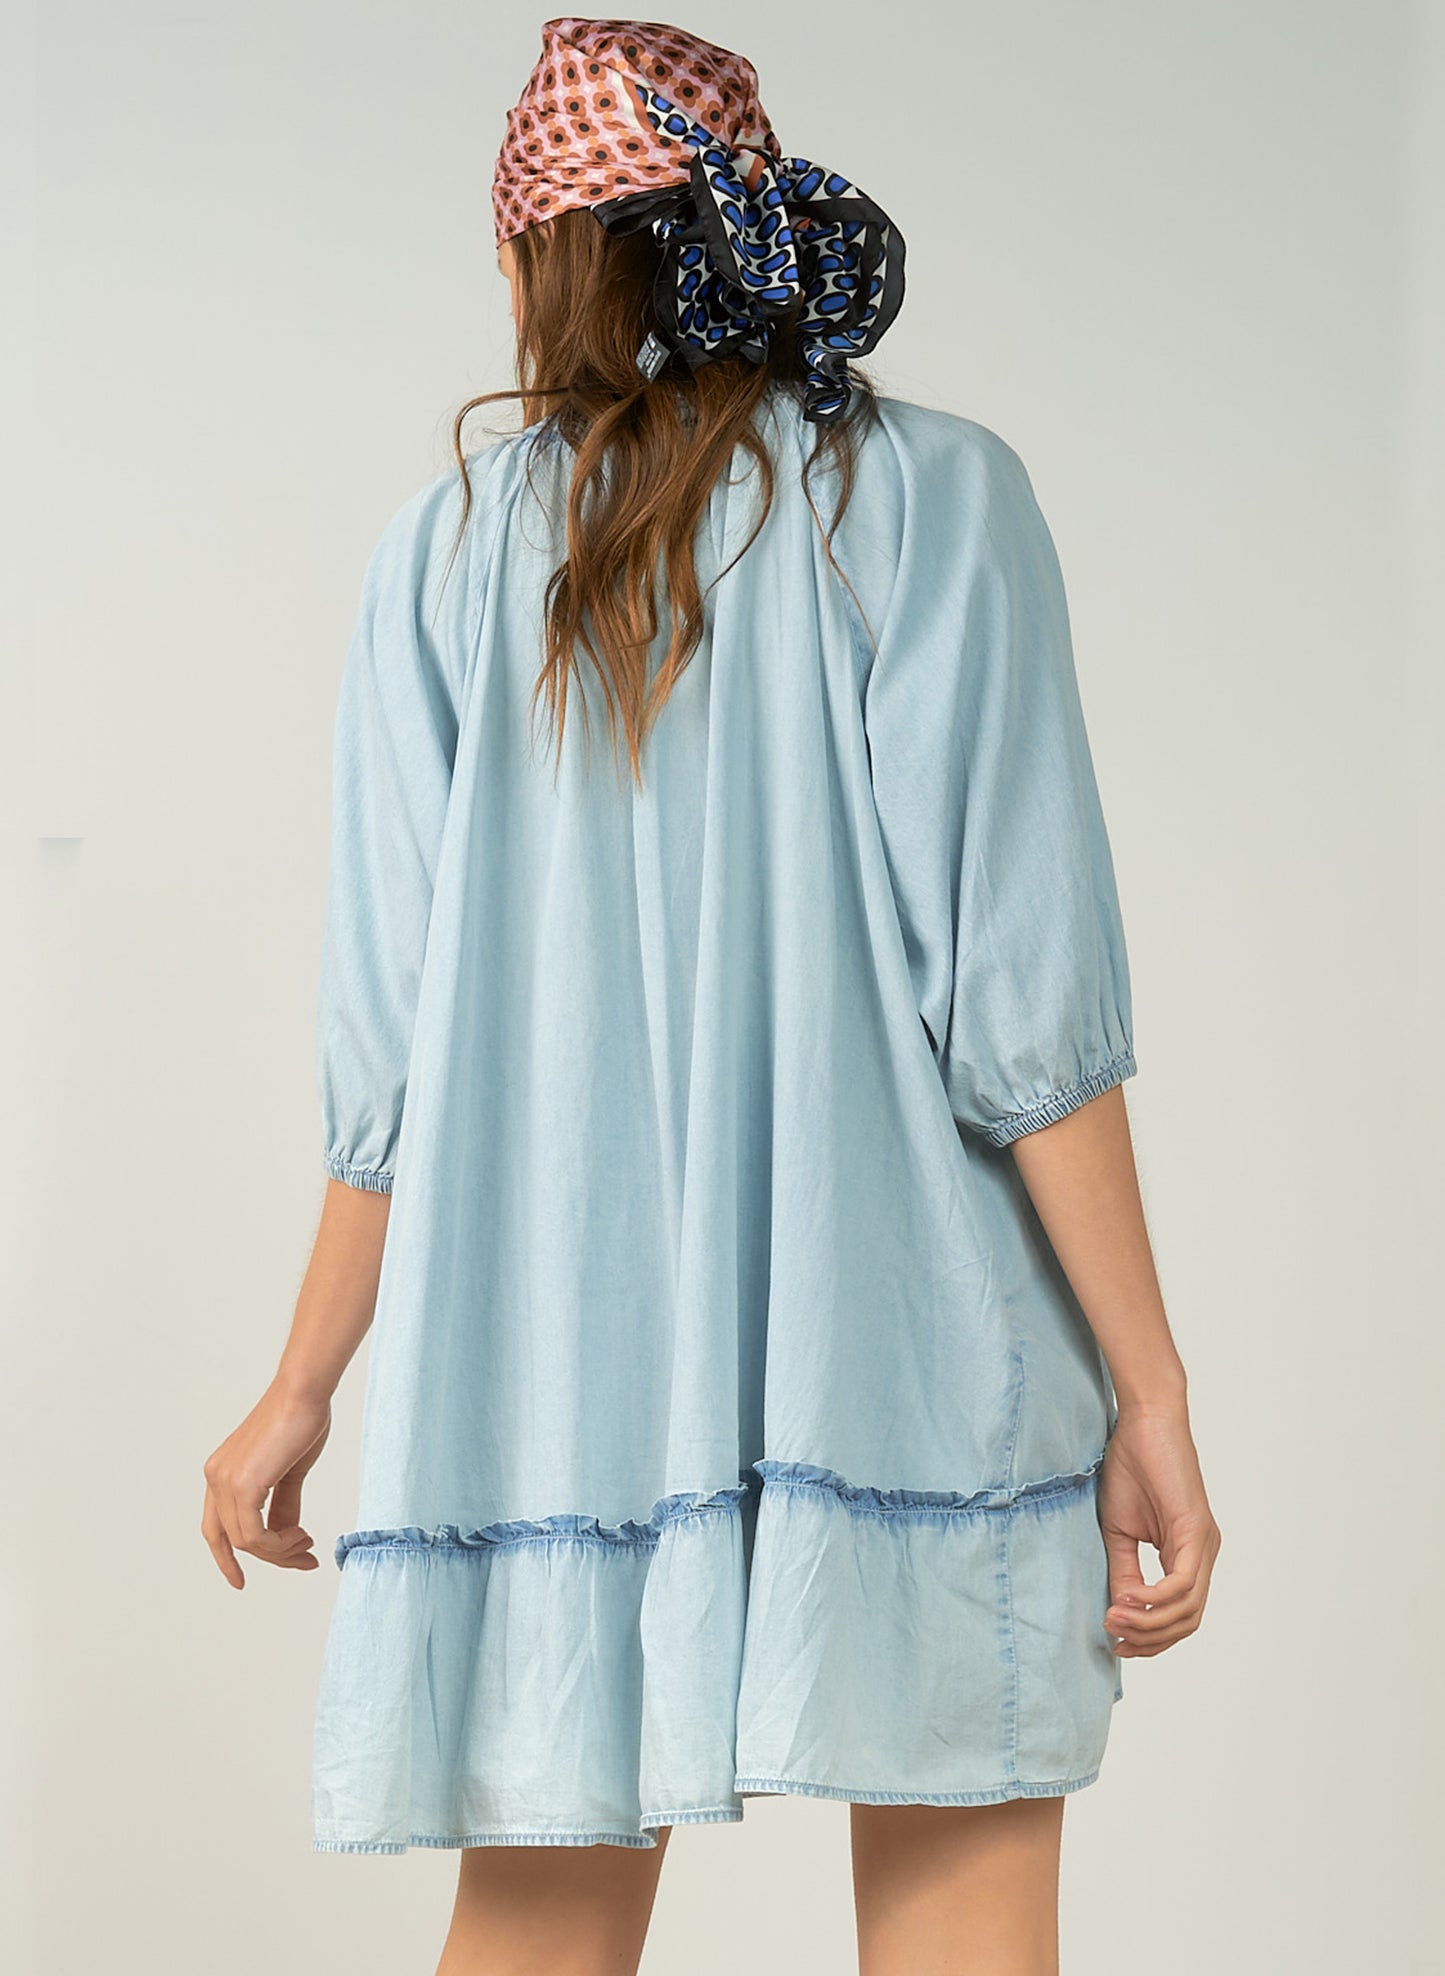 Elan Elan 3/4 Sleeve Ruffle Bottom Dress - Blue Wash available at The Good Life Boutique